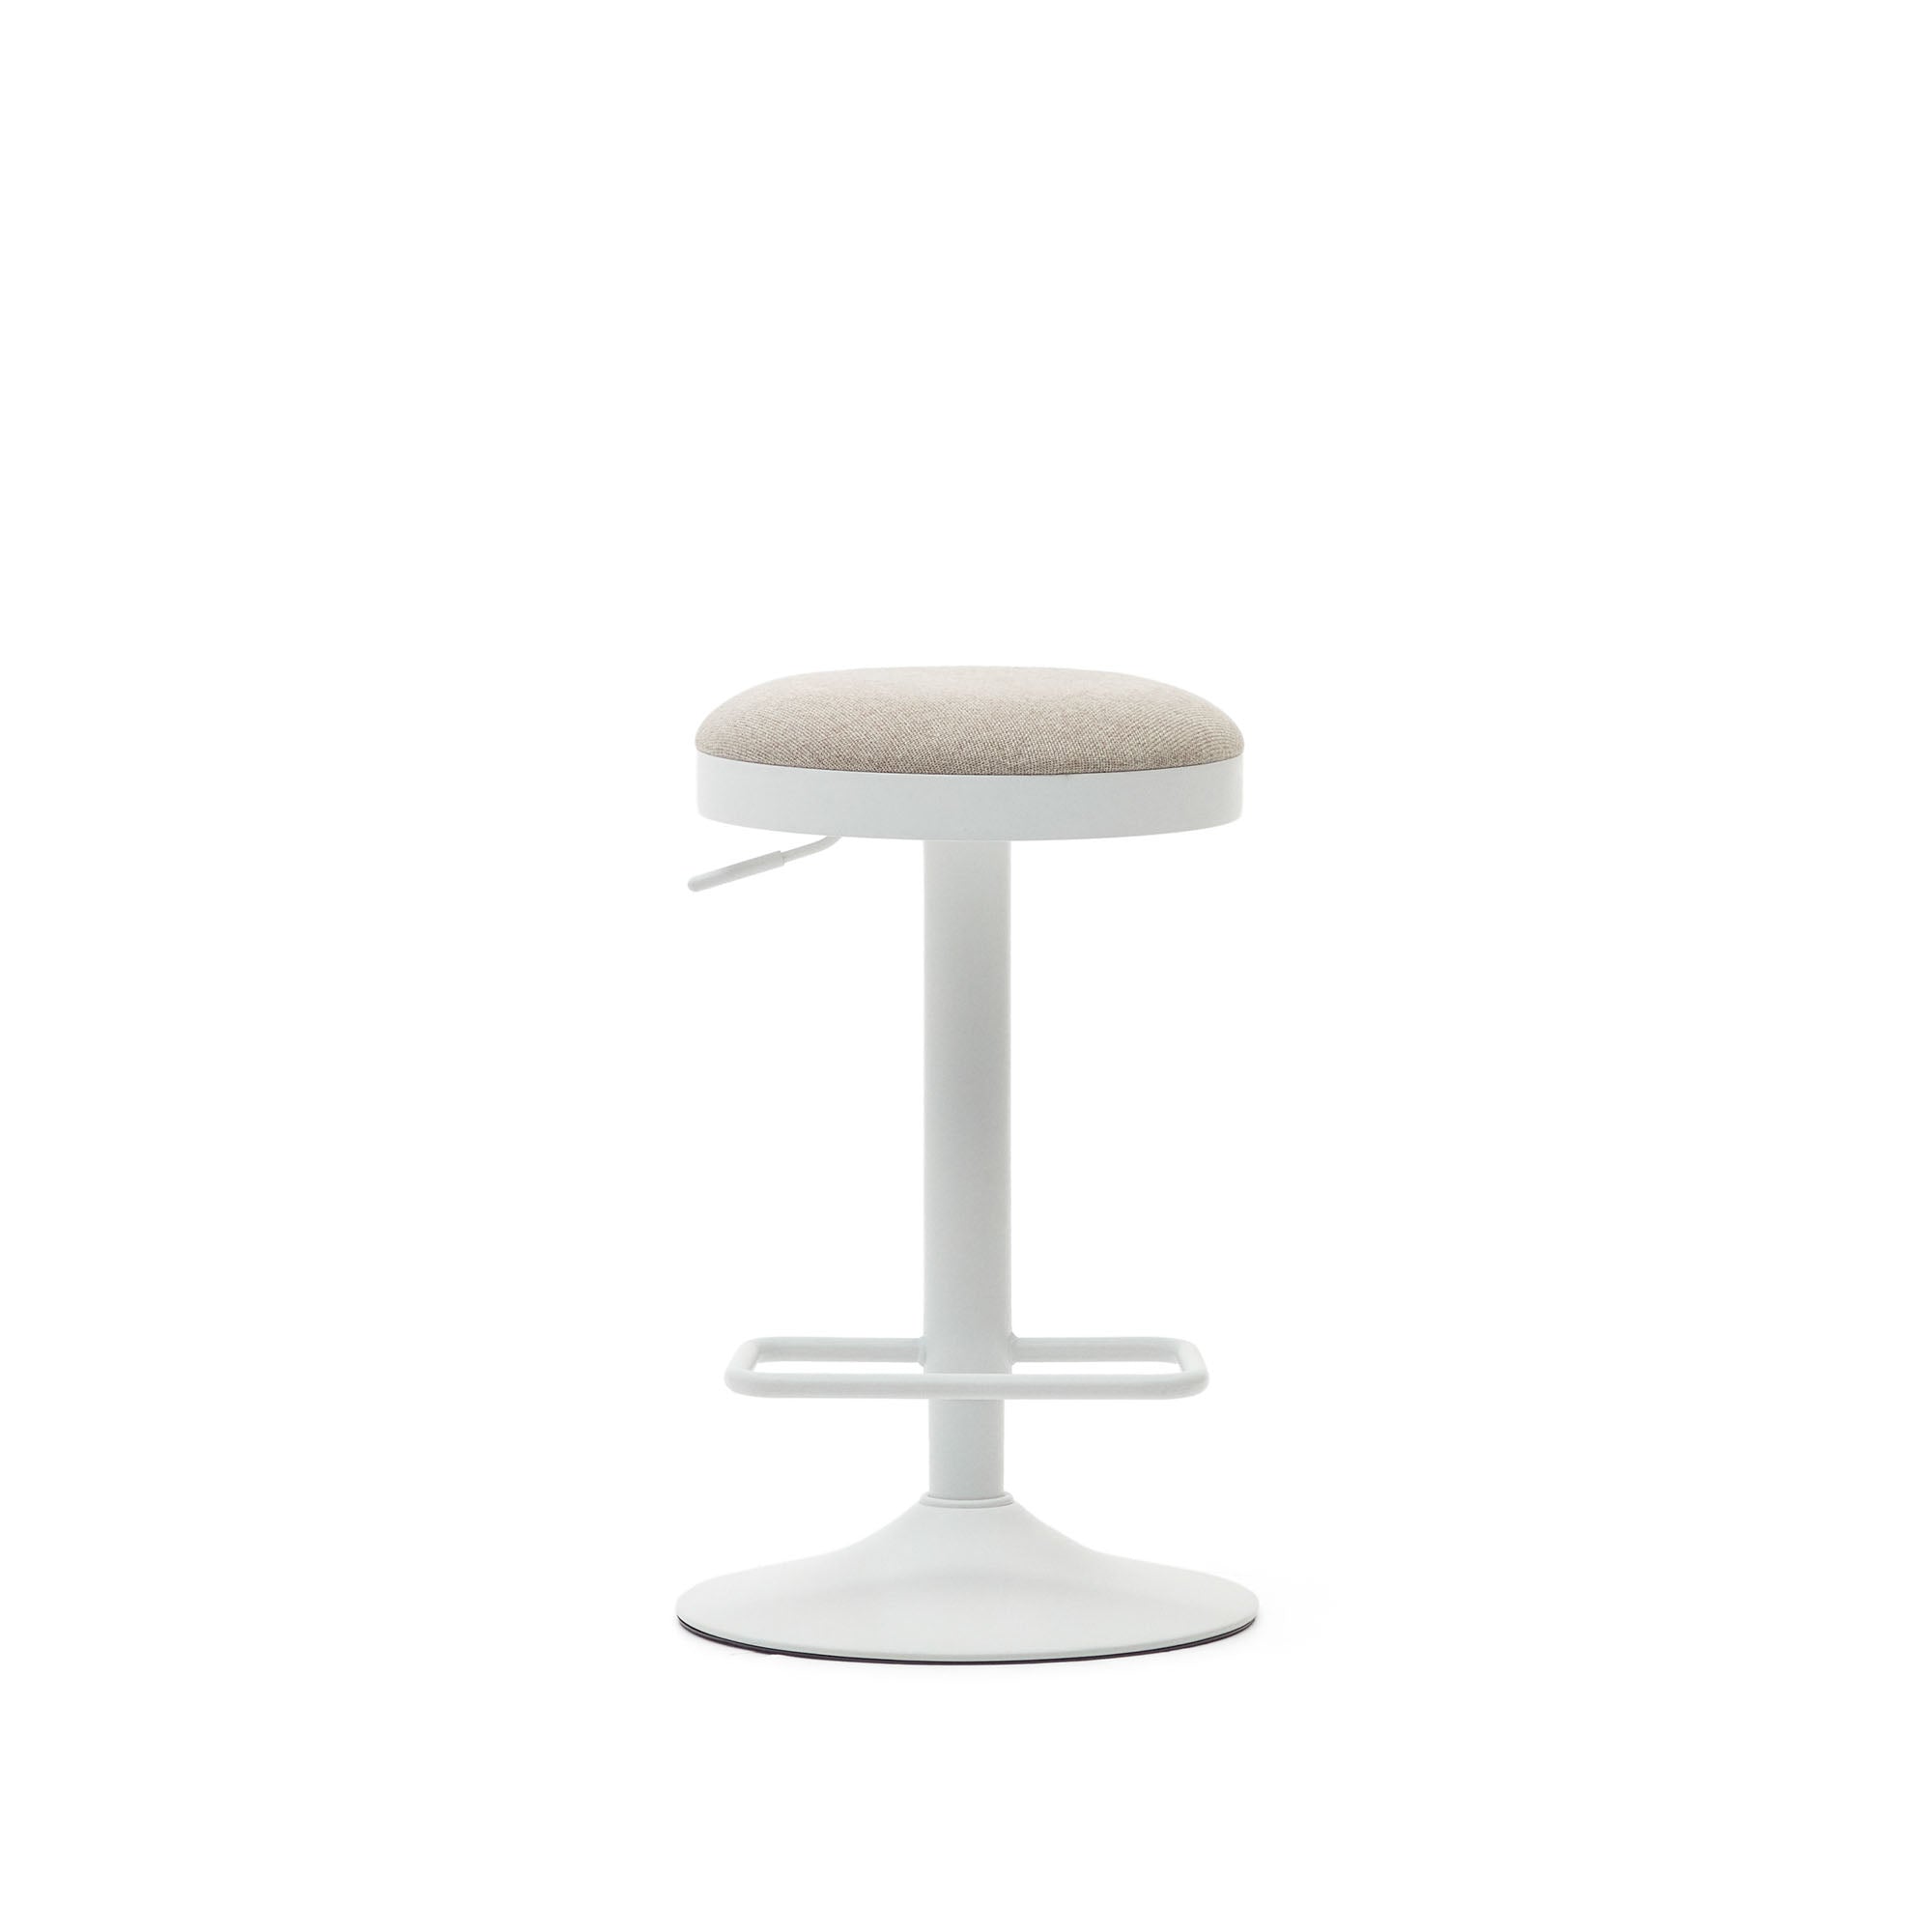 Zaib stool in beige chenille and matt white steel height 58-80 cm